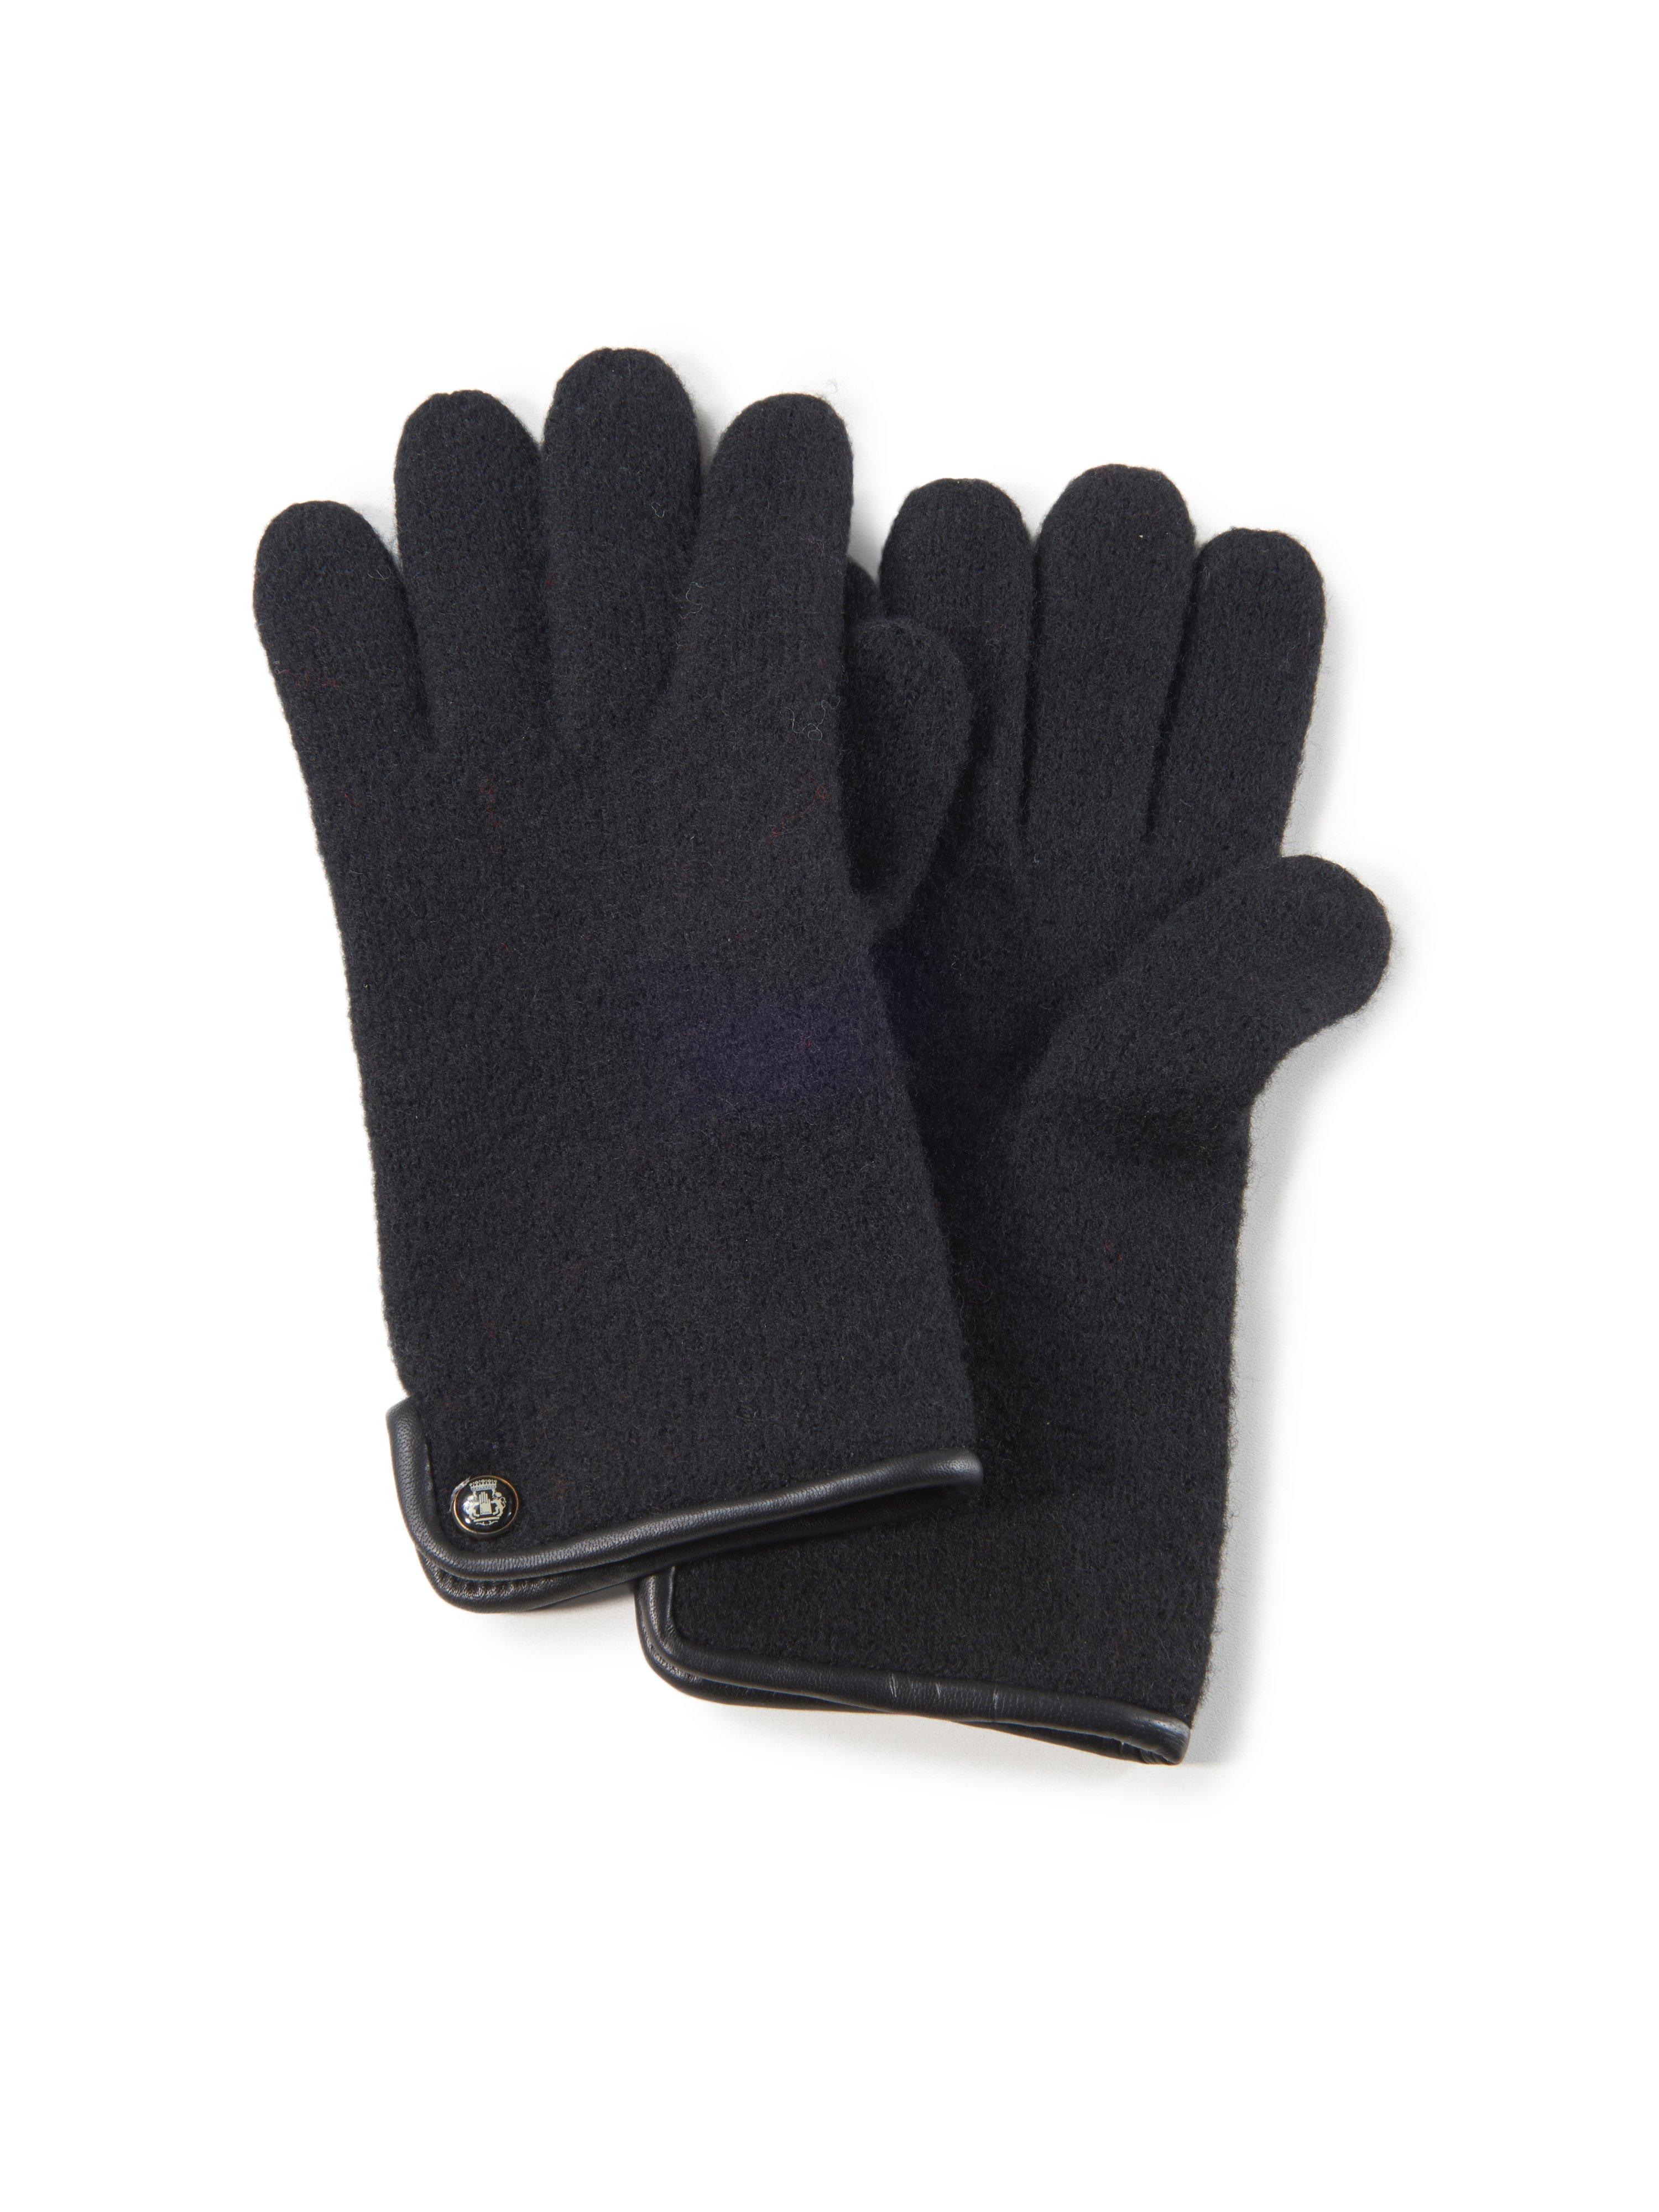 Roeckl Handschoenen M - zwart - zwart